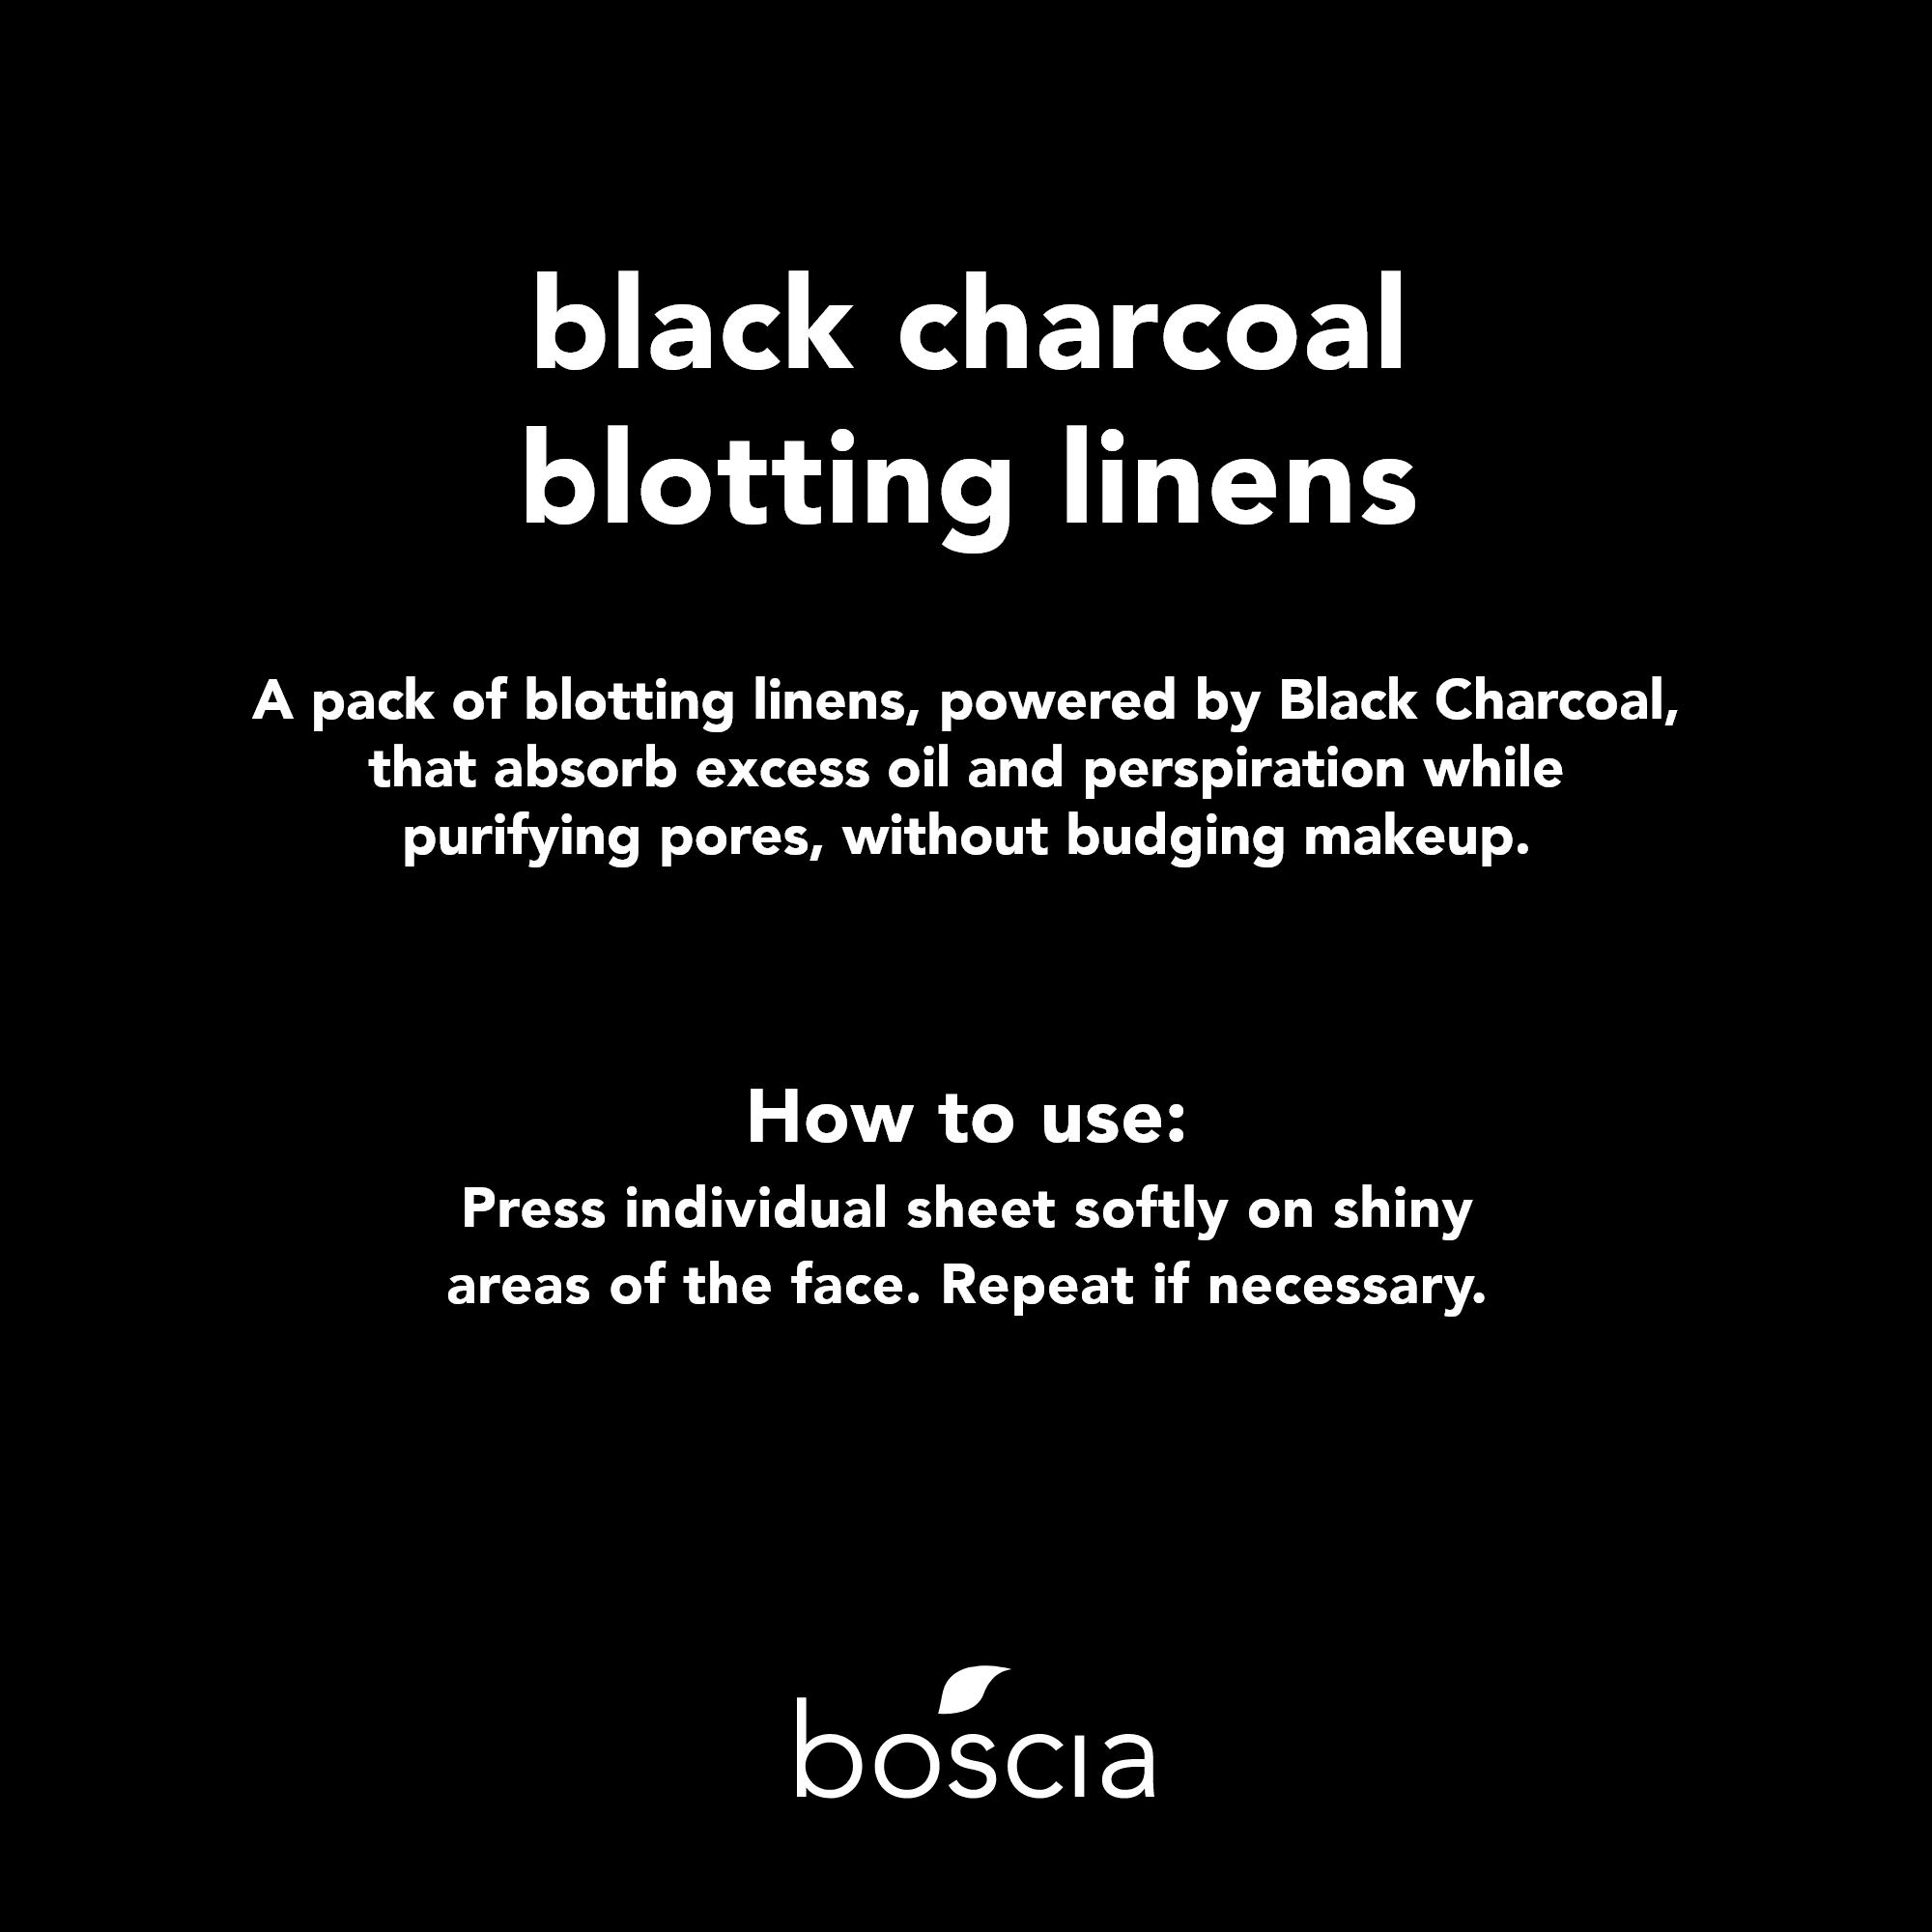 boscia - Blotting Linens - Clear Complexion, Black Charcoal, & Green Tea Blotting Linens Variety Pack